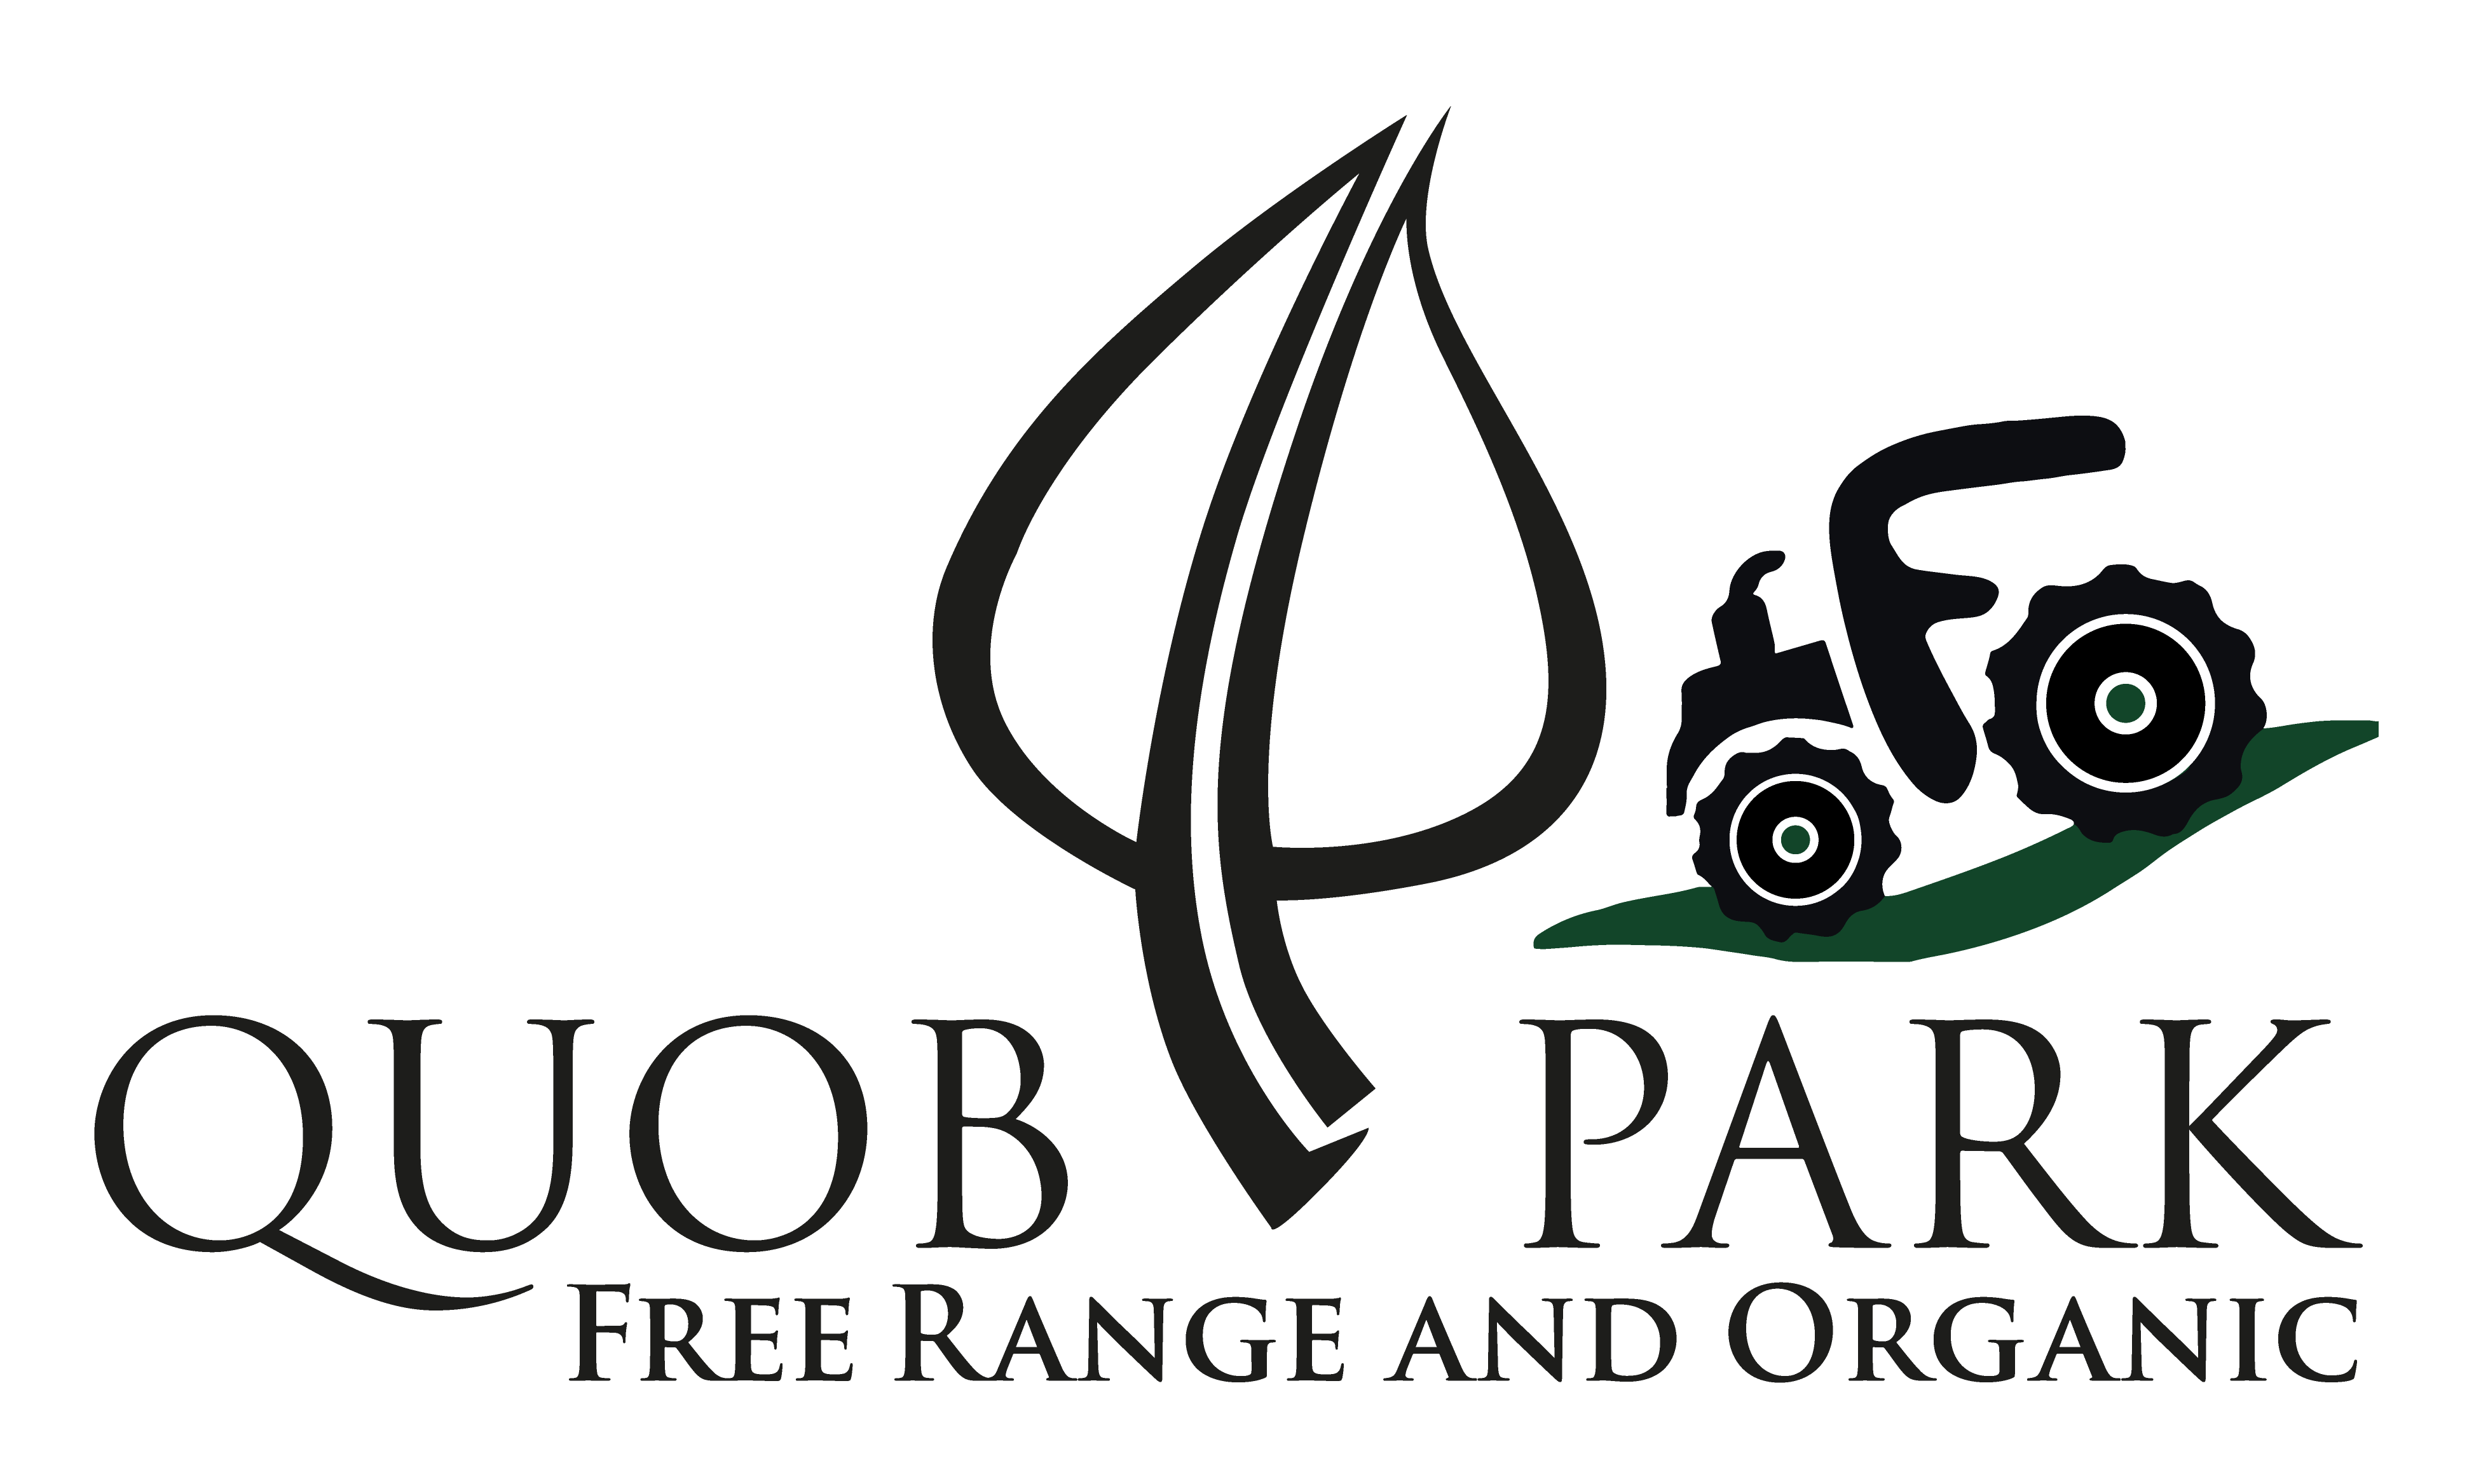 Quob Park Free Range and Organic logo